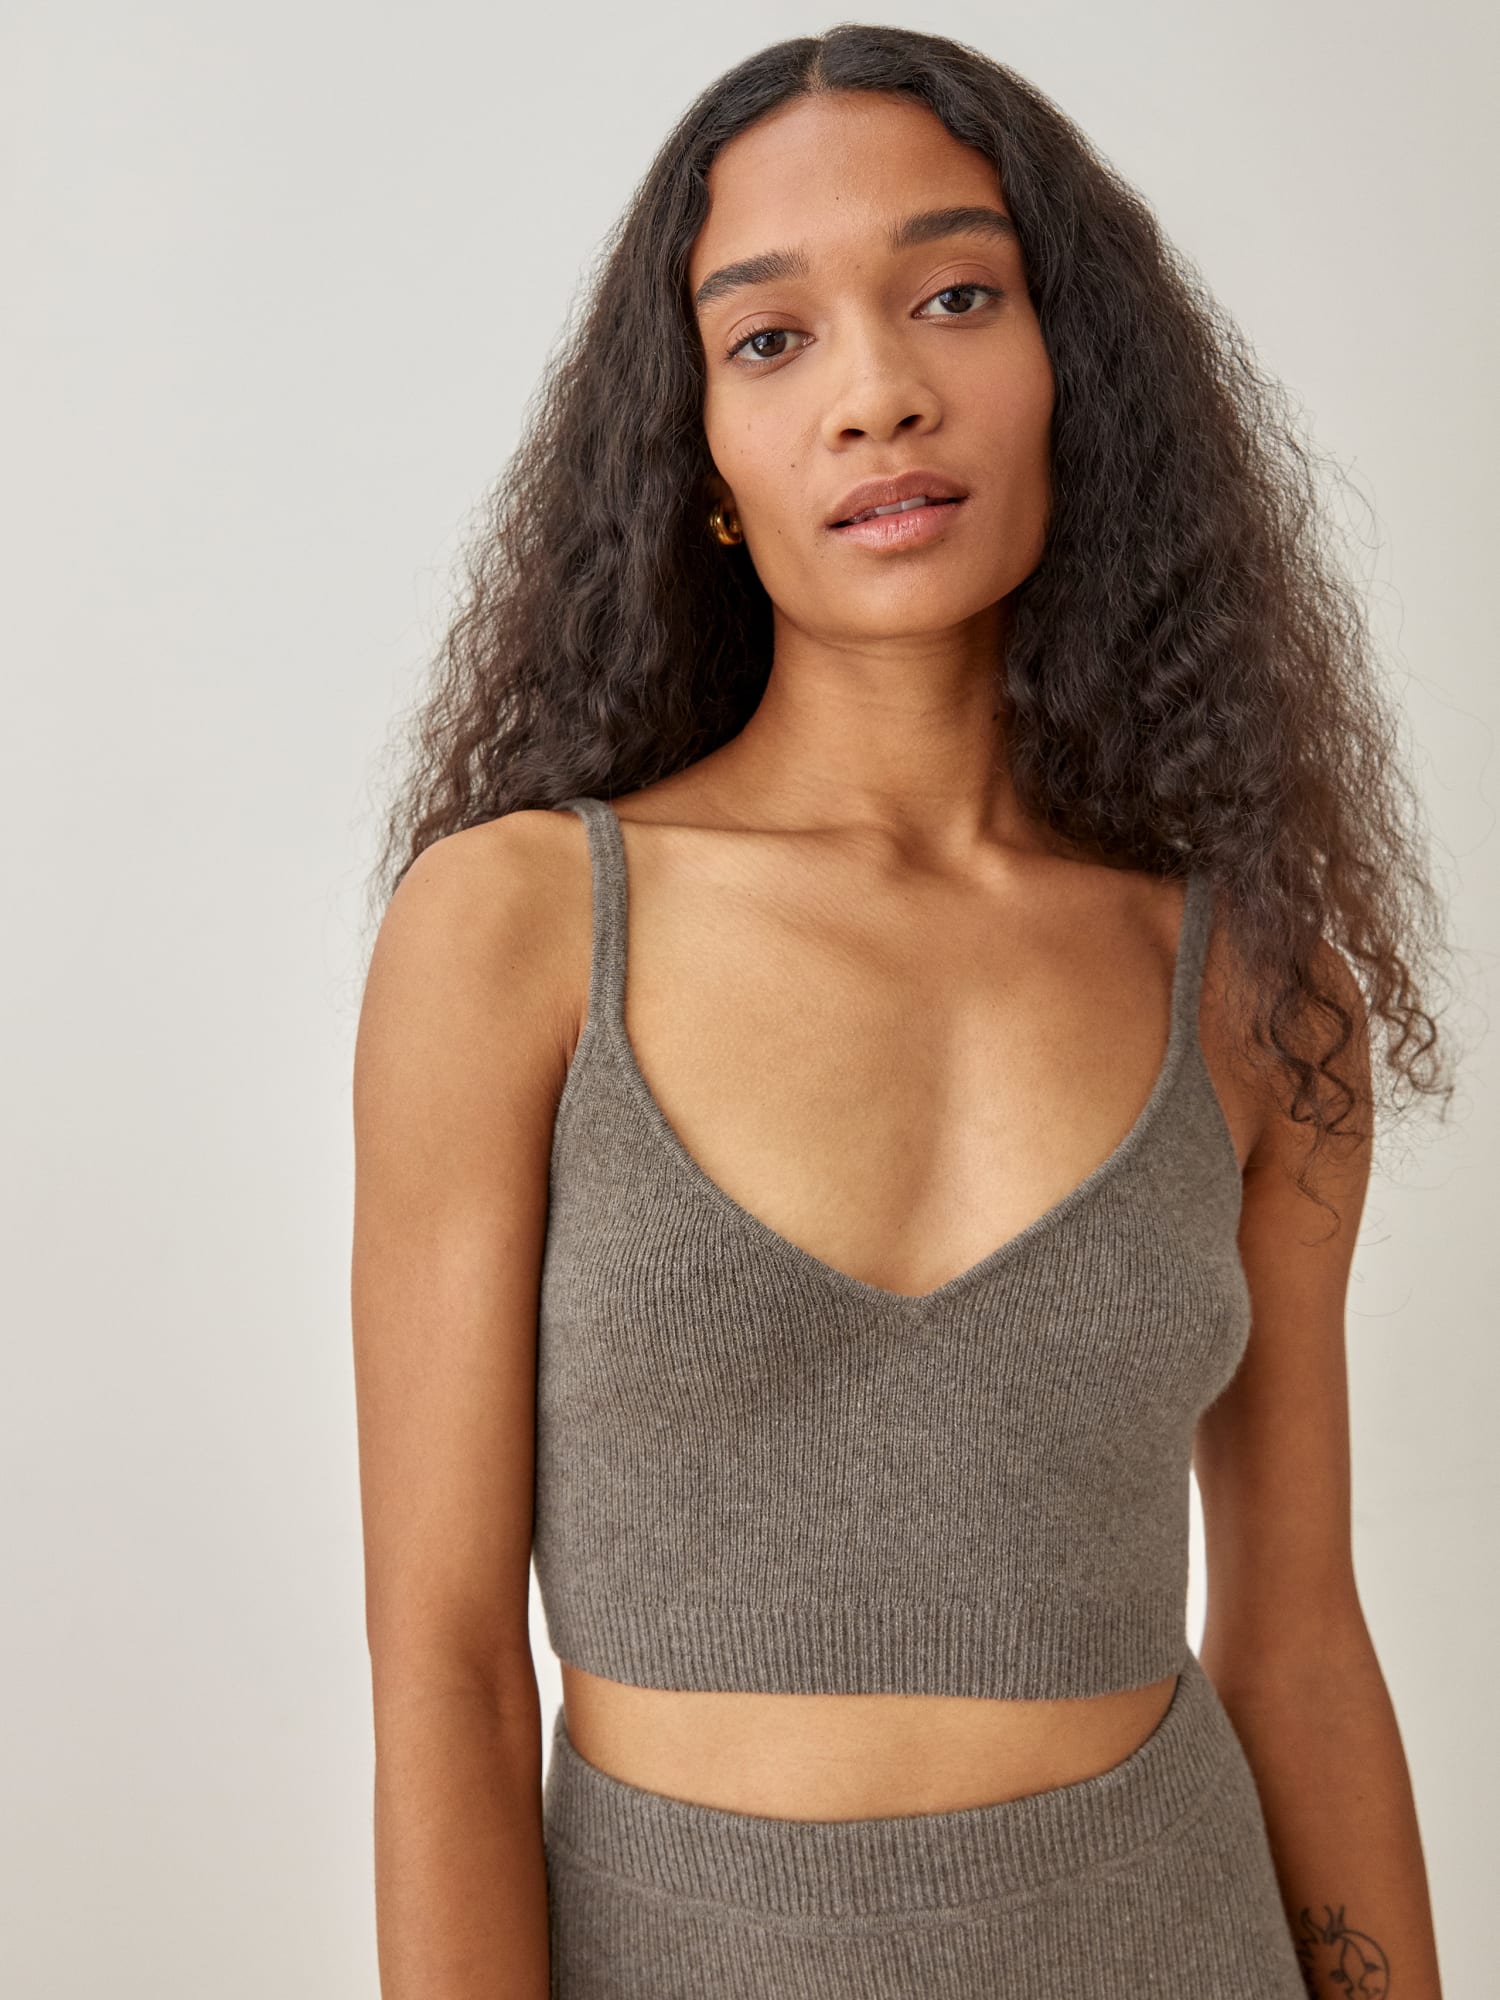 Women's cashmere bra top